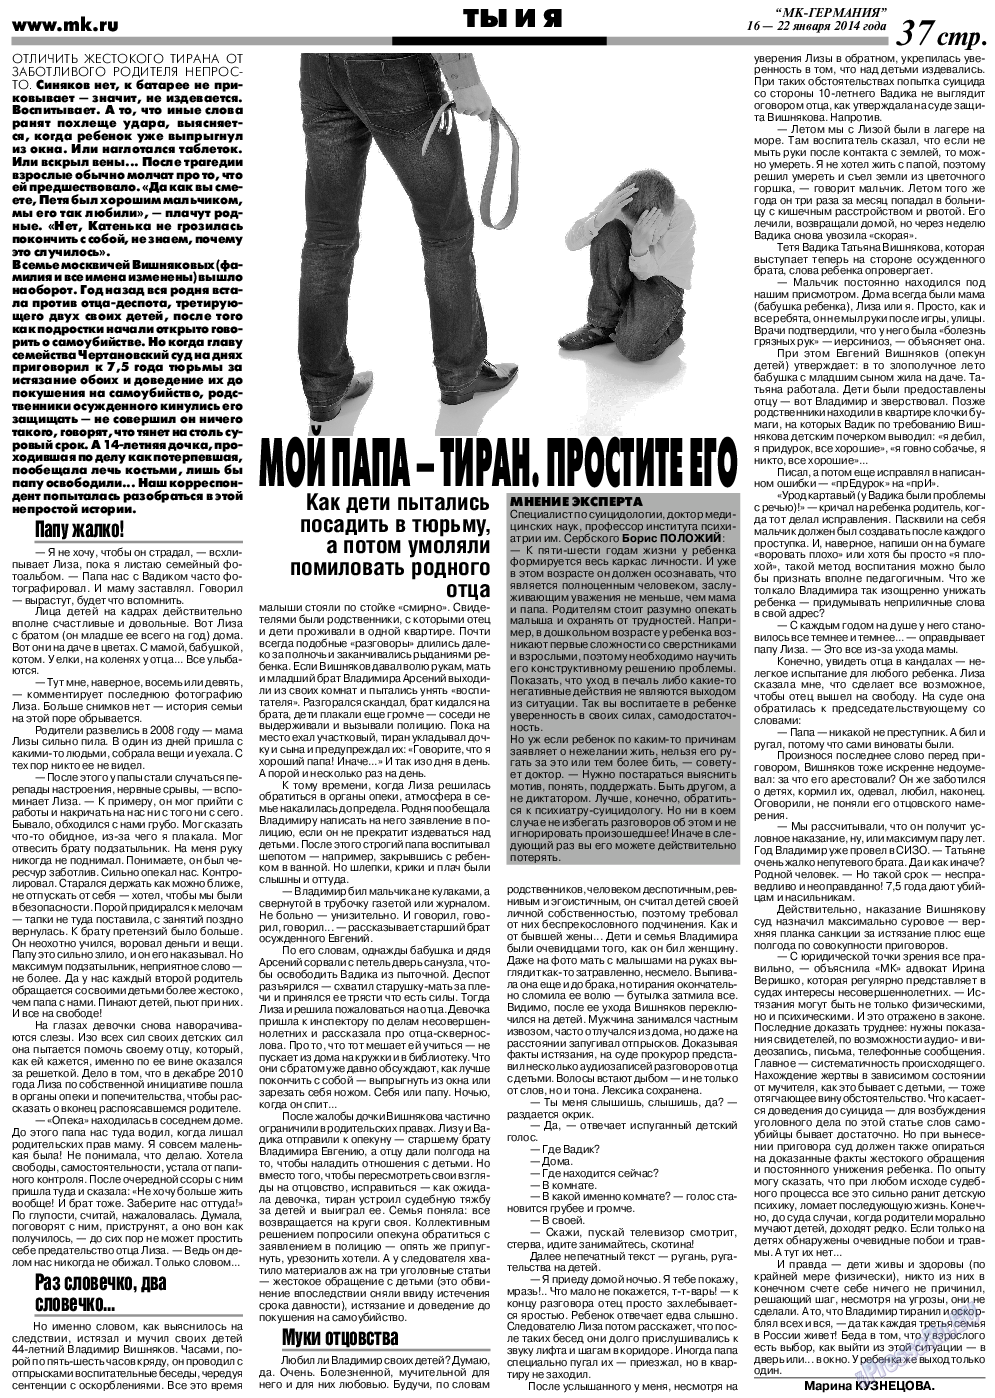 МК-Германия, газета. 2014 №3 стр.37